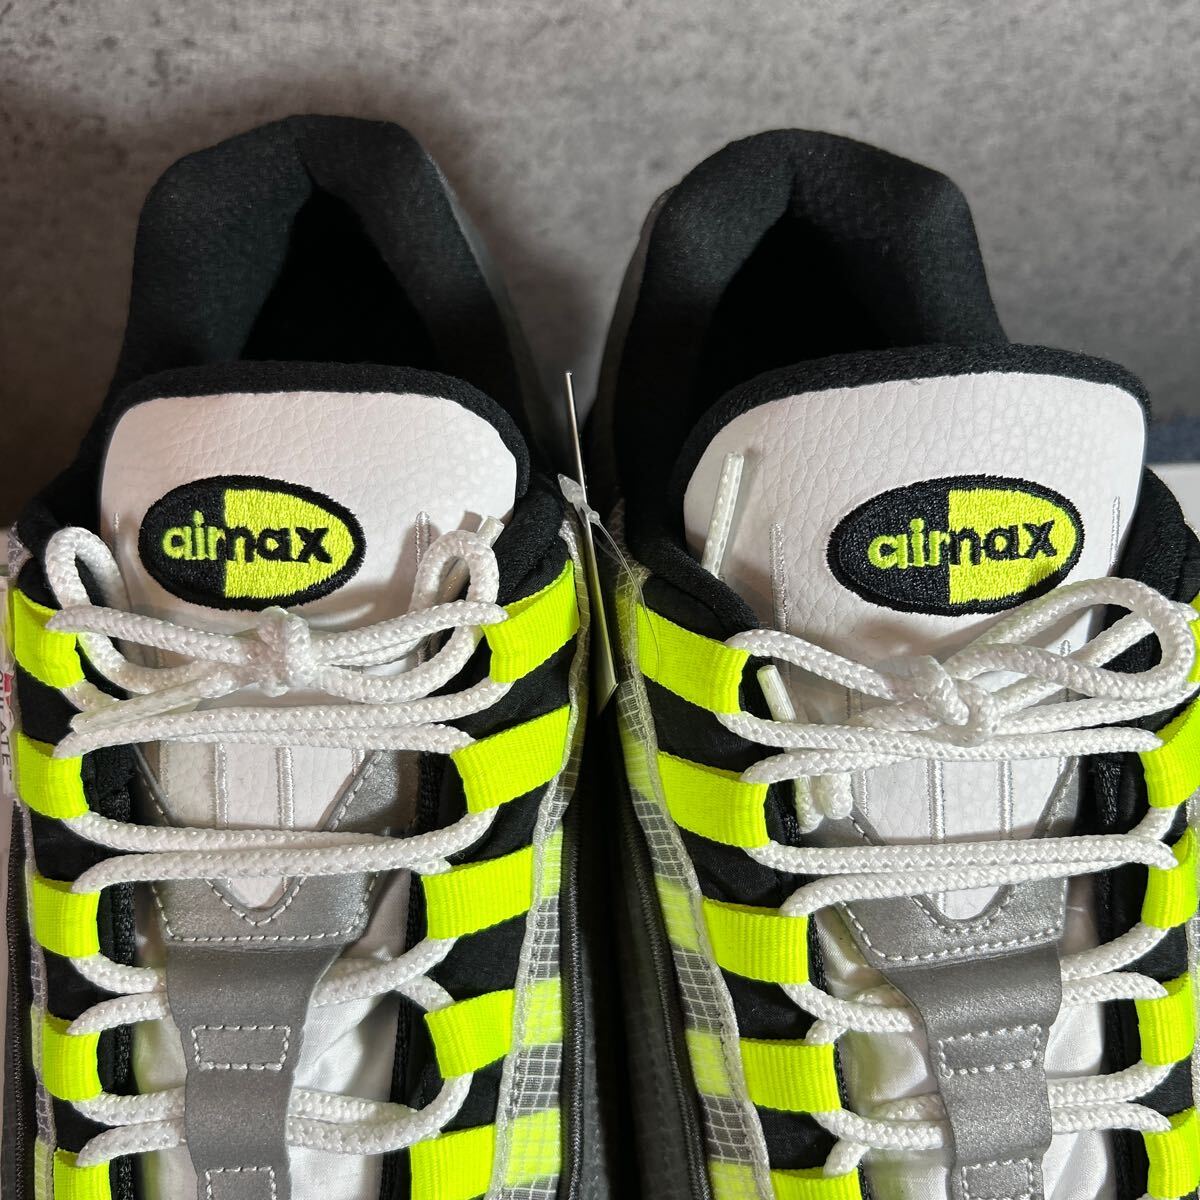 [ не использовался товар ] Nike NIKE AIR MAX air max DA7559-991 желтый черный мужской 32cm